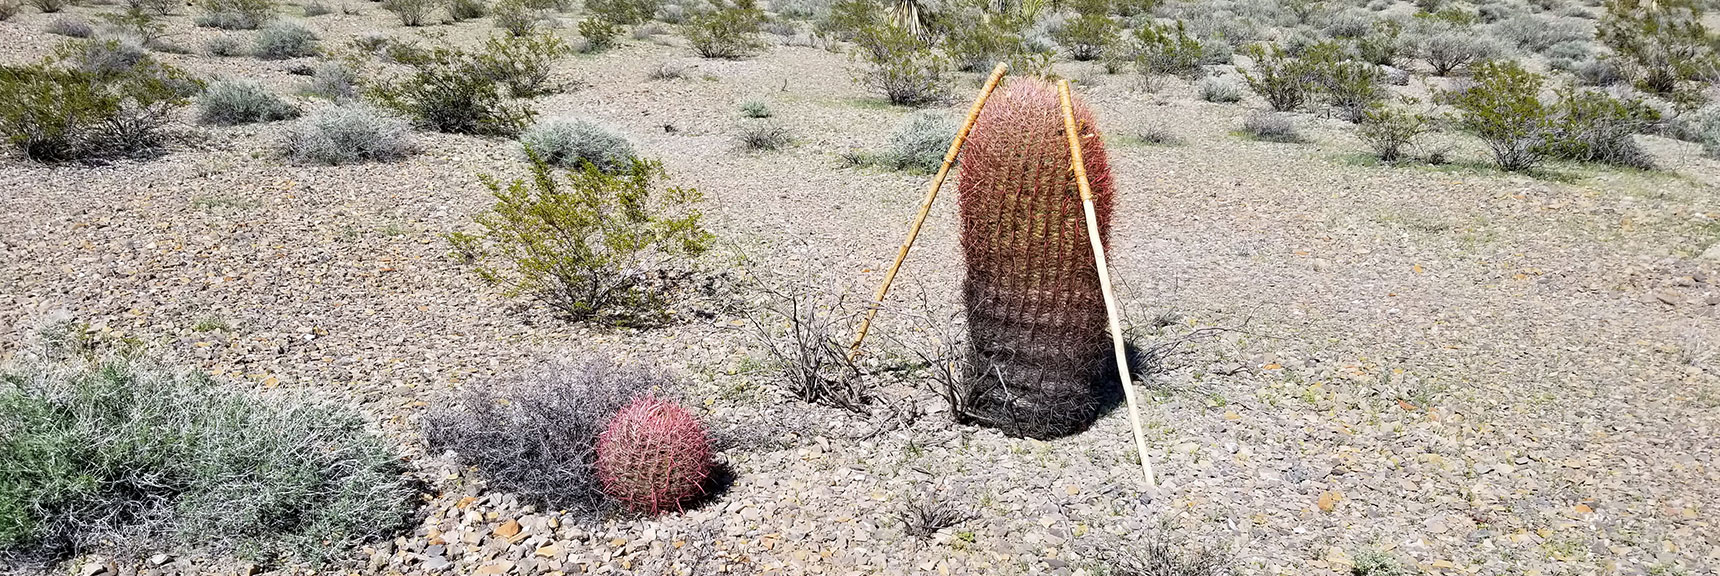 Huge Barrel Cactus South of Gass Peak, Nevada